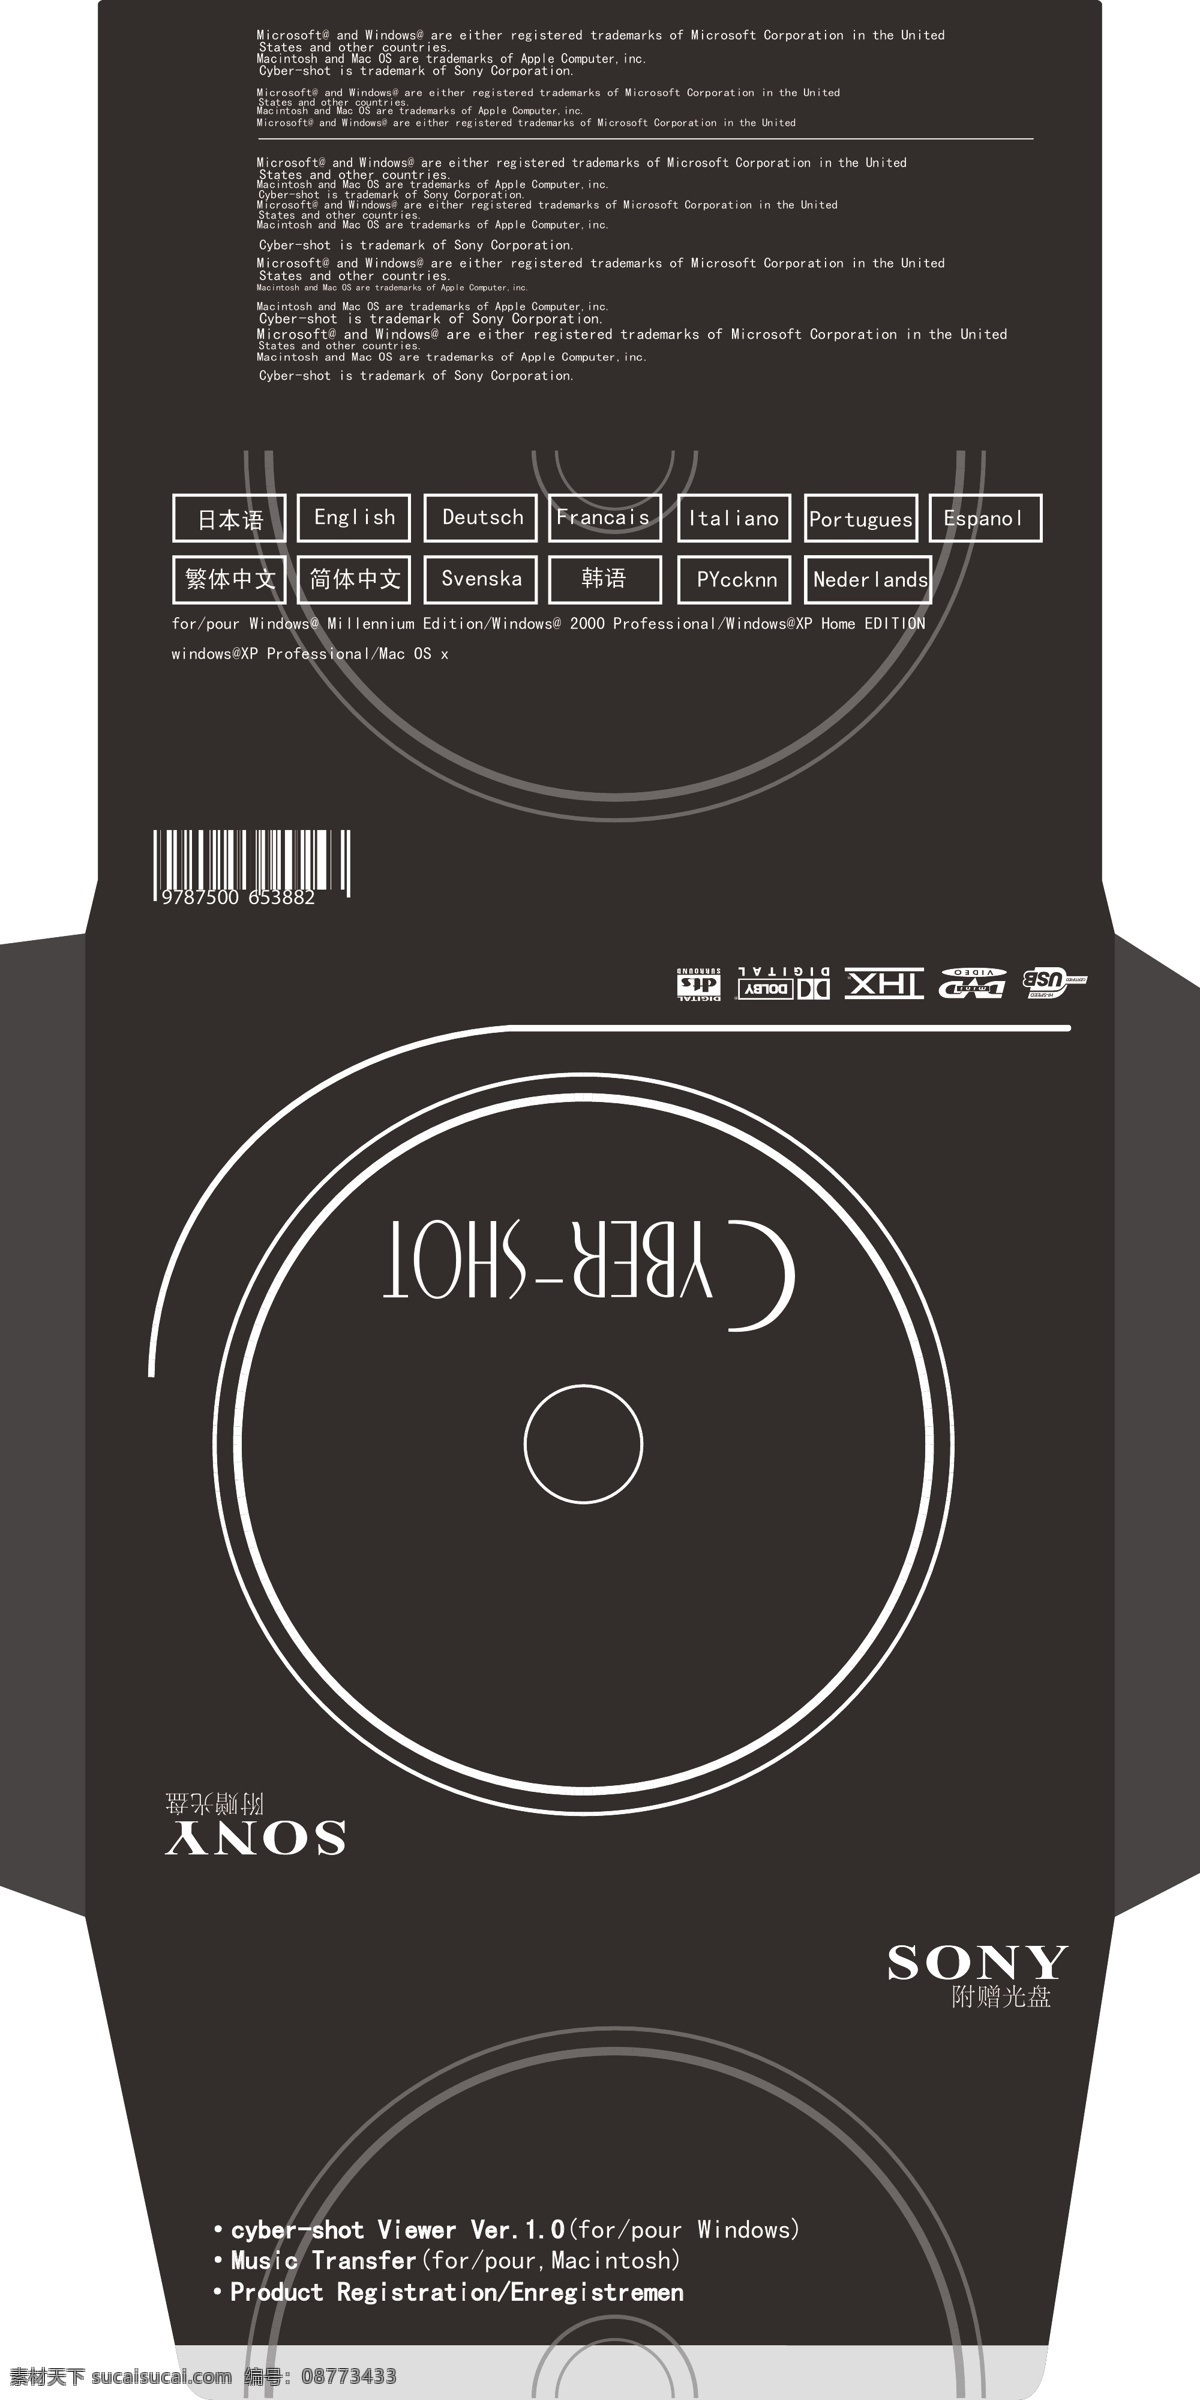 sony 索尼 黑色 光盘包装 包装 光盘 时尚 包装设计 矢量